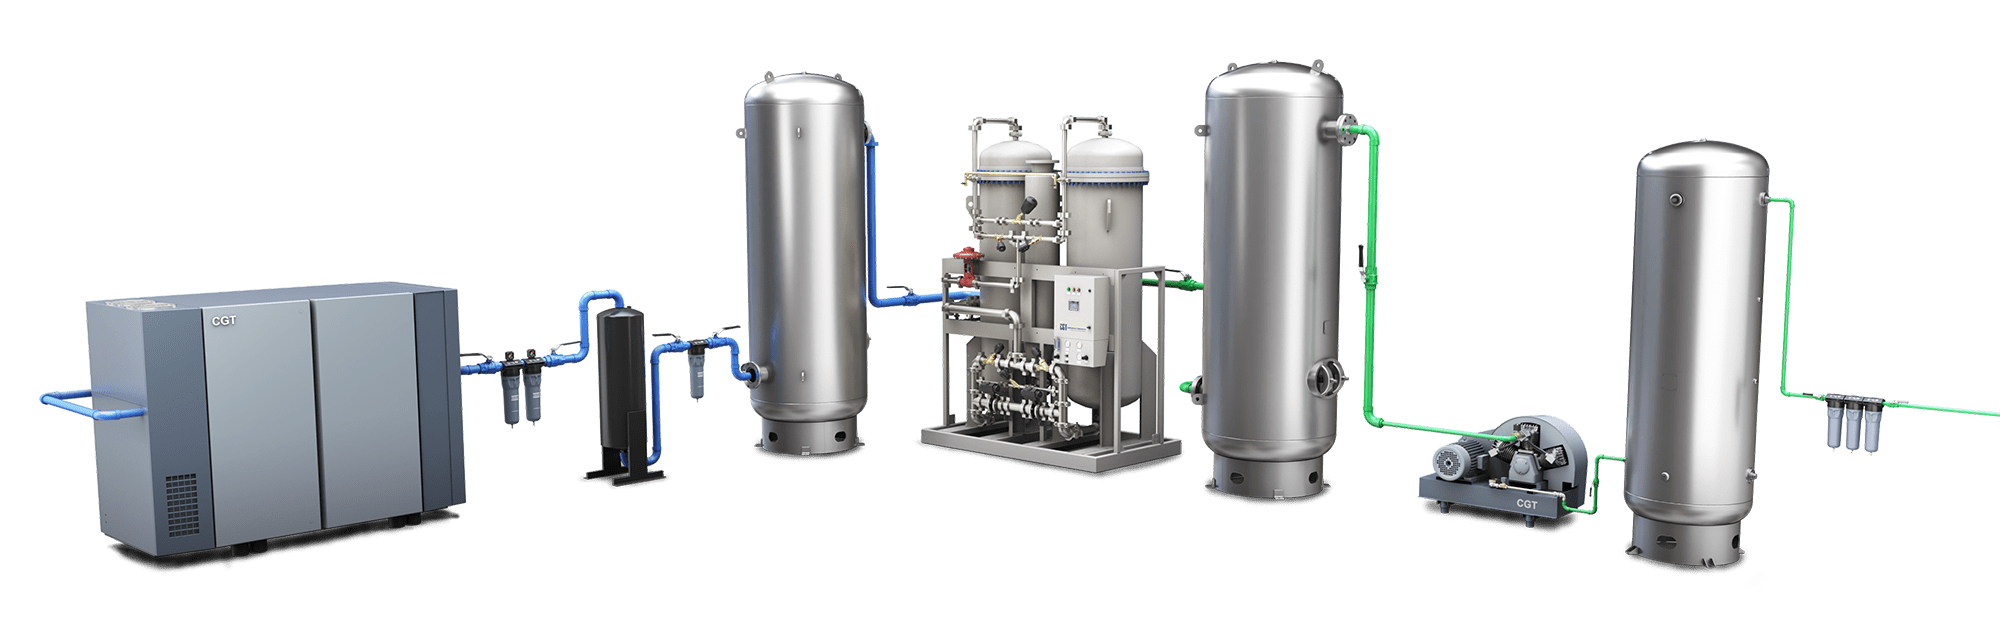 Nitropure - Nitro Generators for Laser Cutting (Beam Purge & Assist Gas)